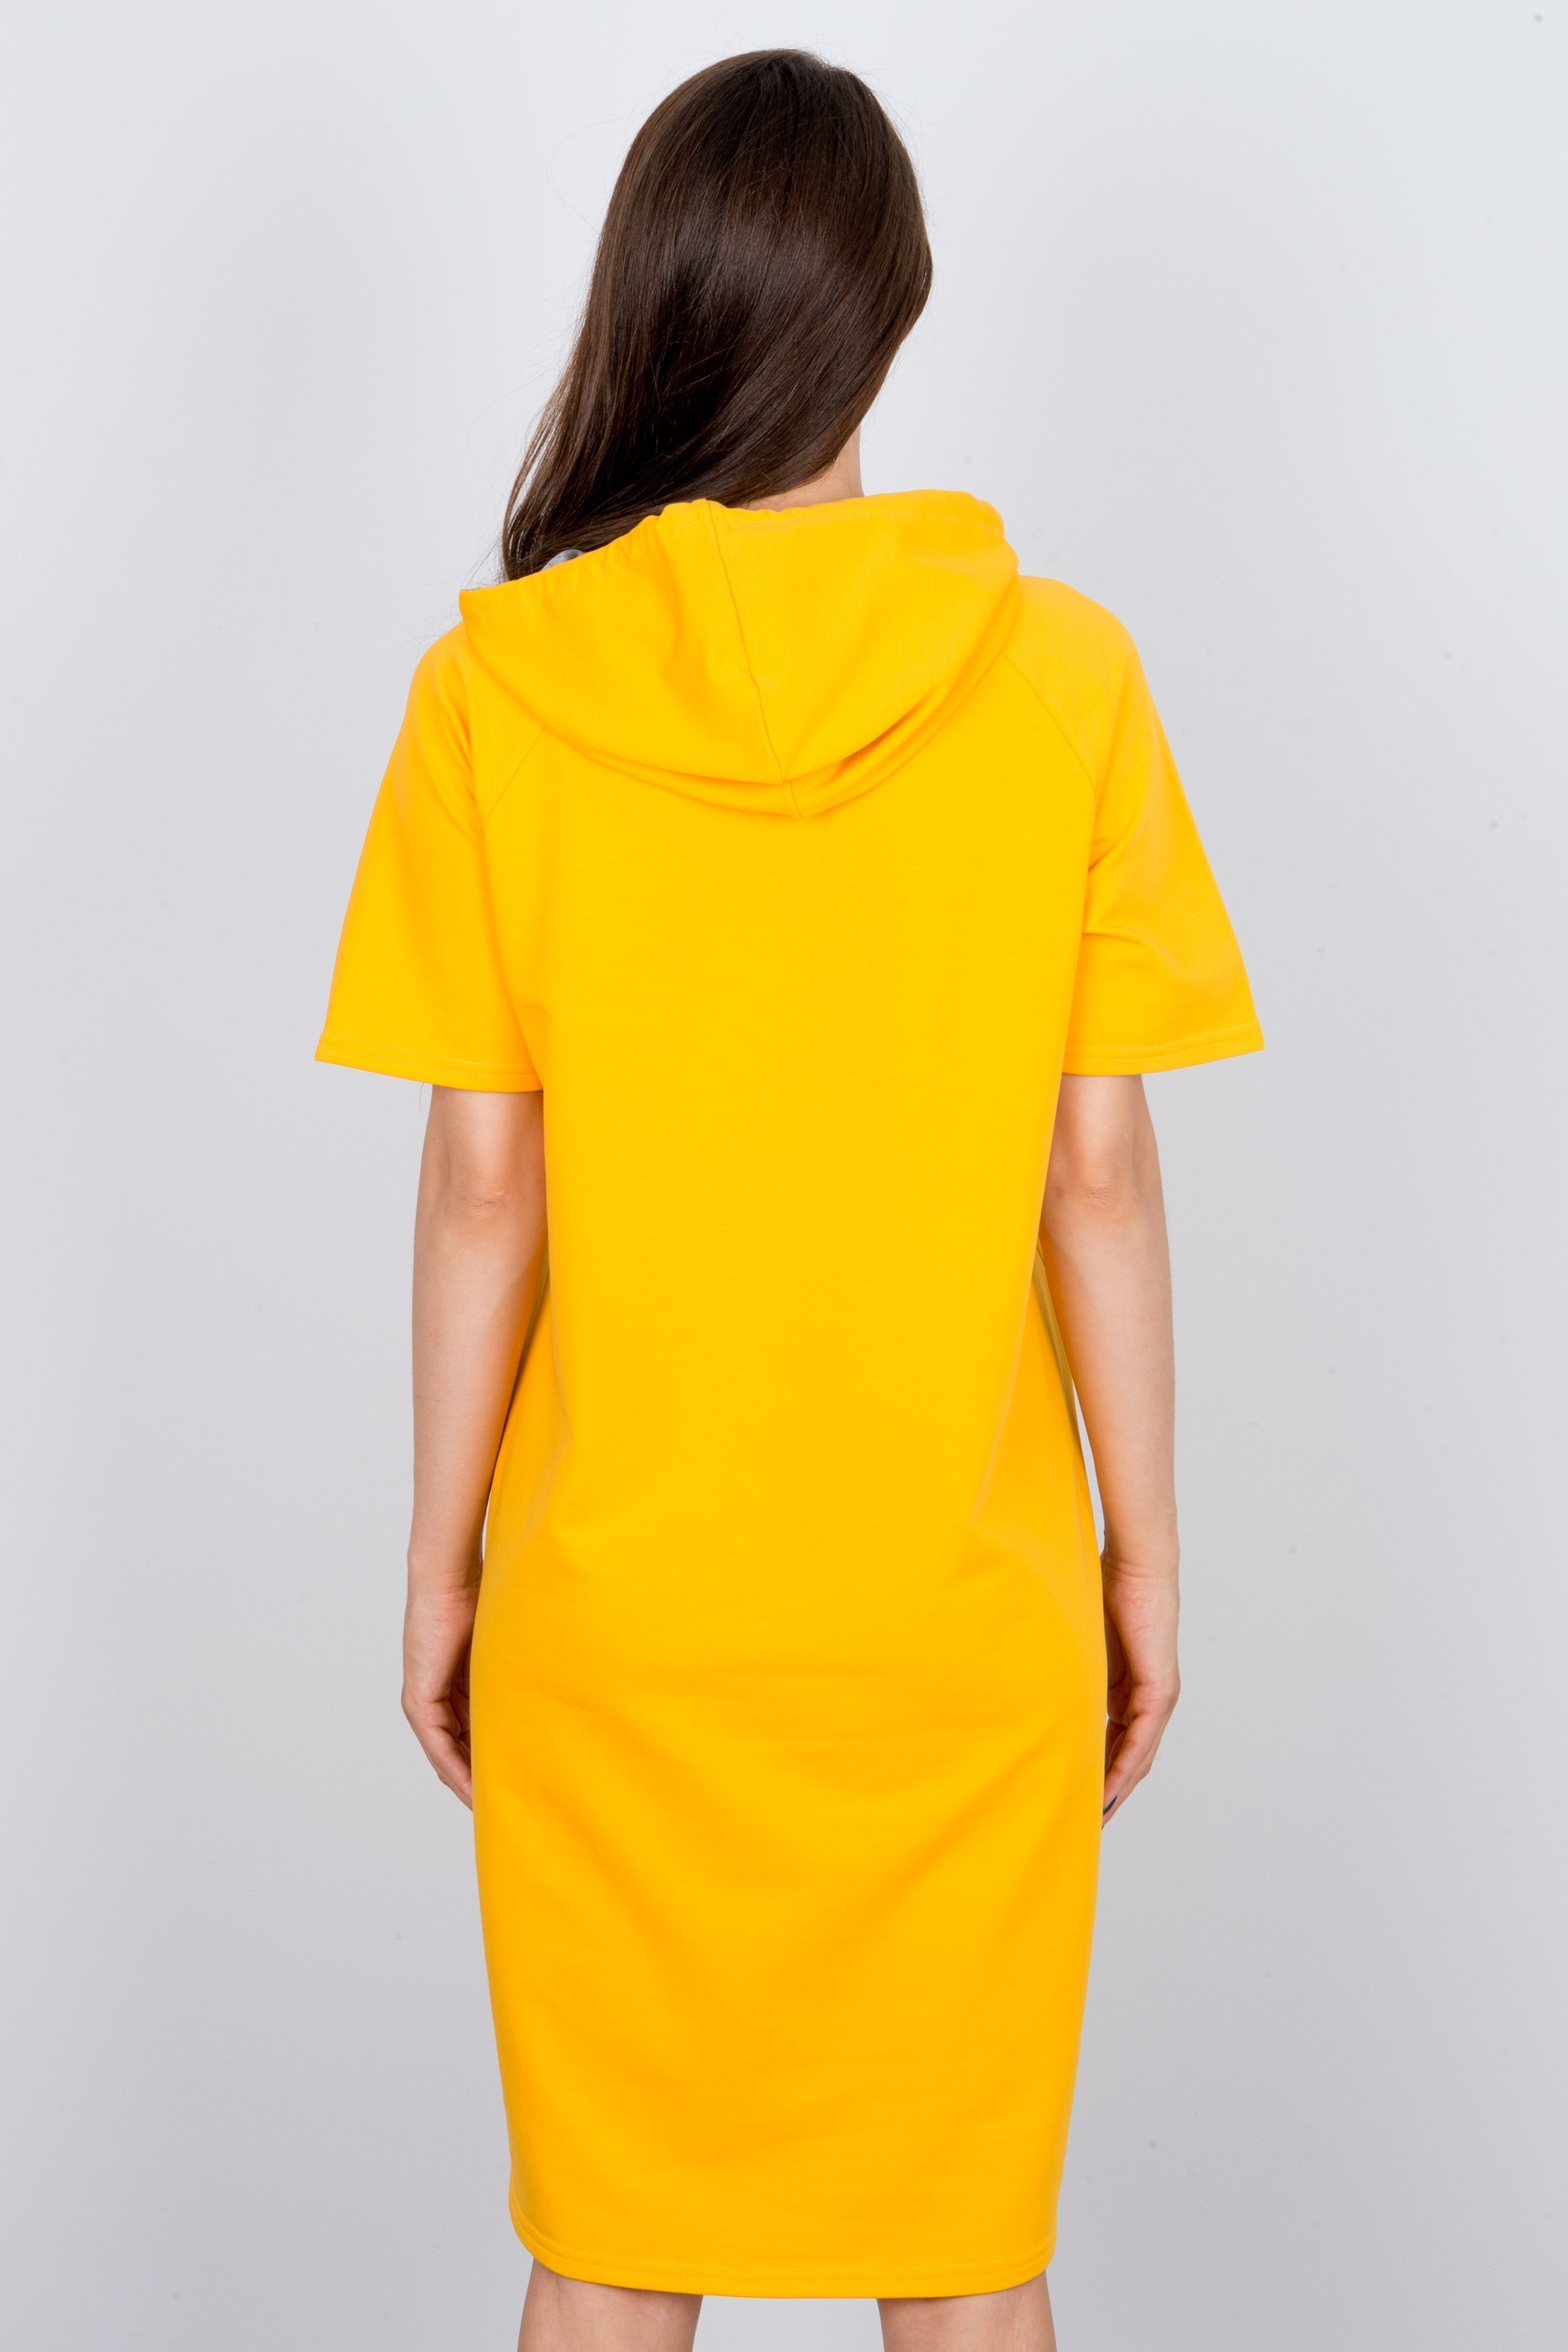 платье Л951 жёлто-серый меланж